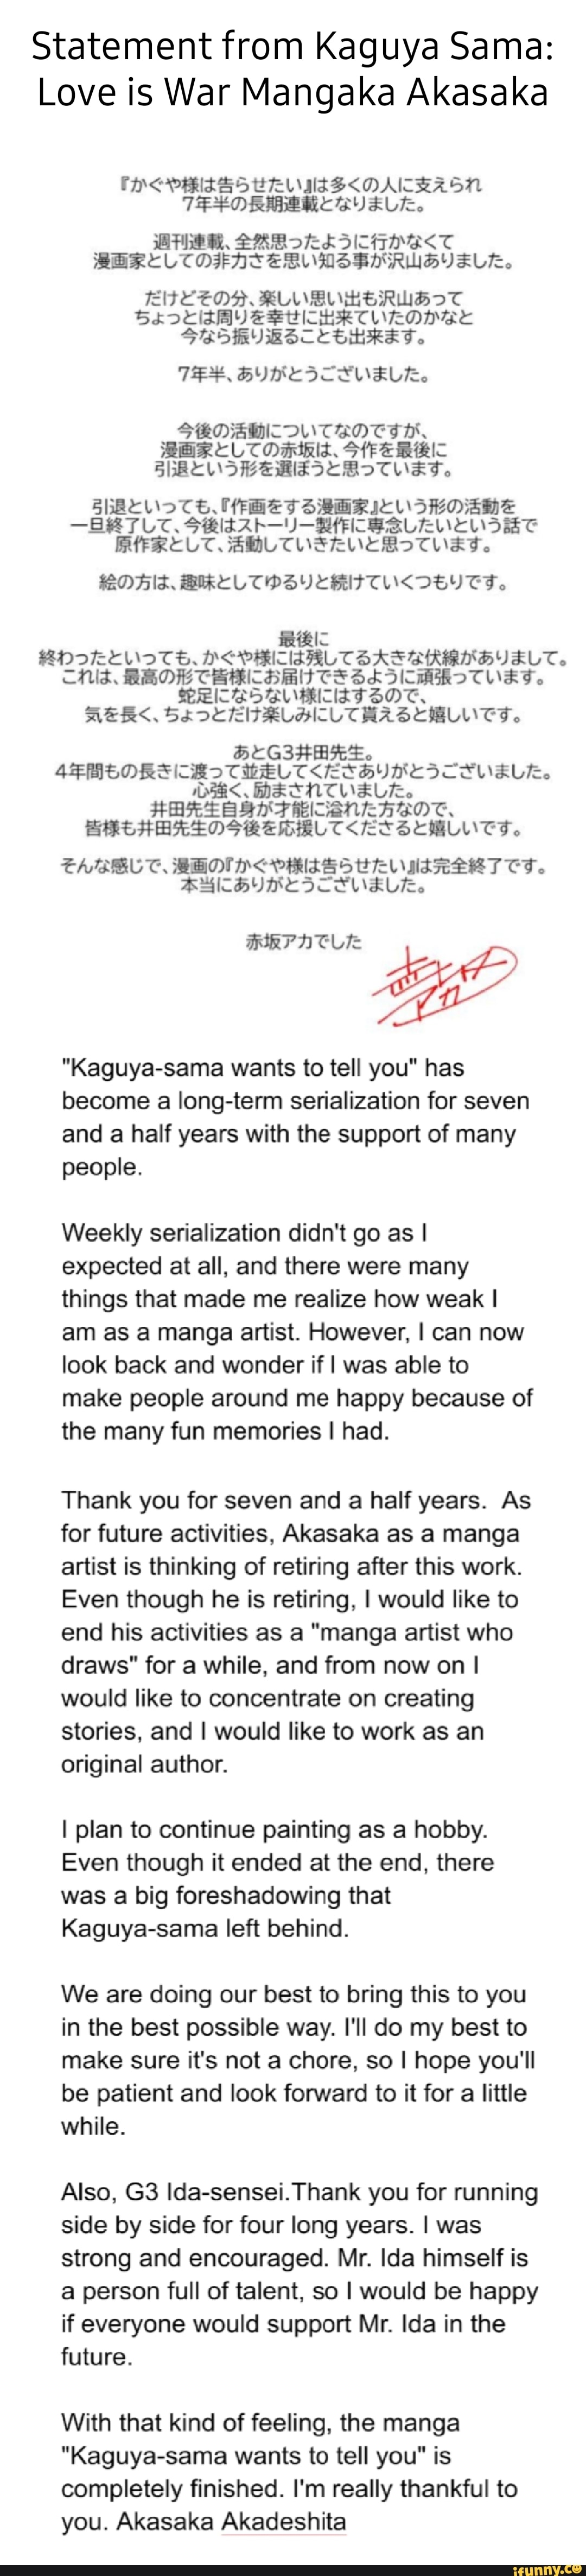 Kaguya-sama: Love Is War Author Akasaka Retires From Manga Drawing